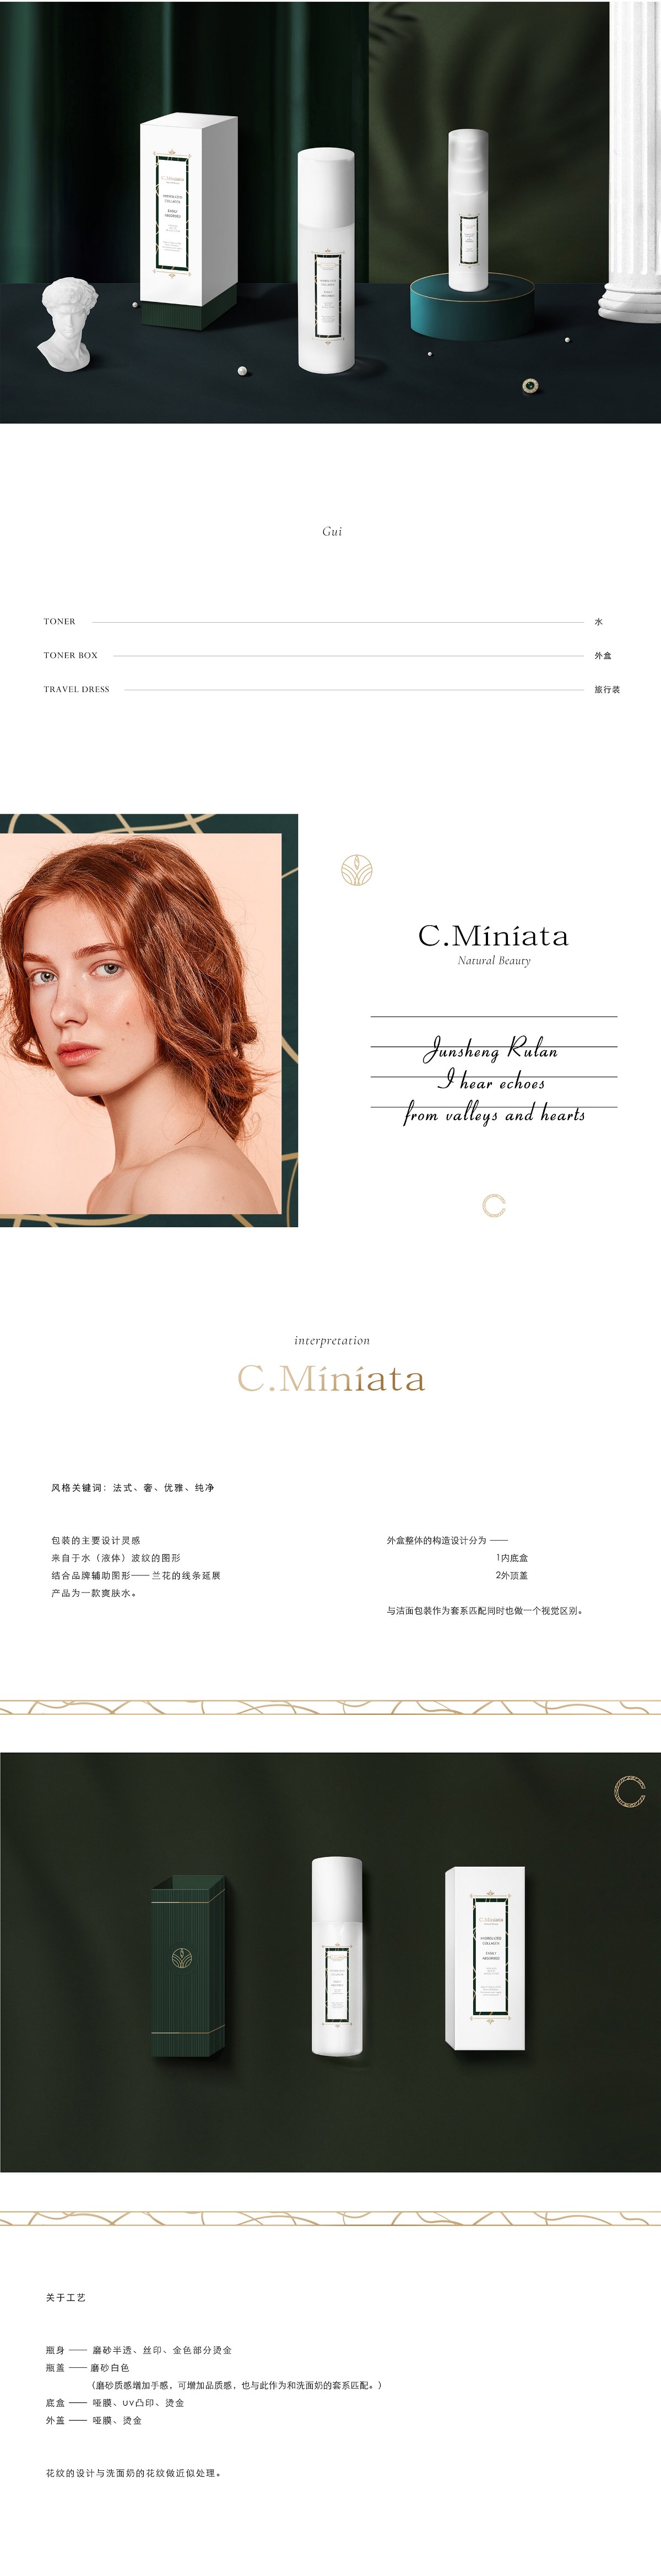 C.miniata法式护肤品牌系列产品包装设计及升级